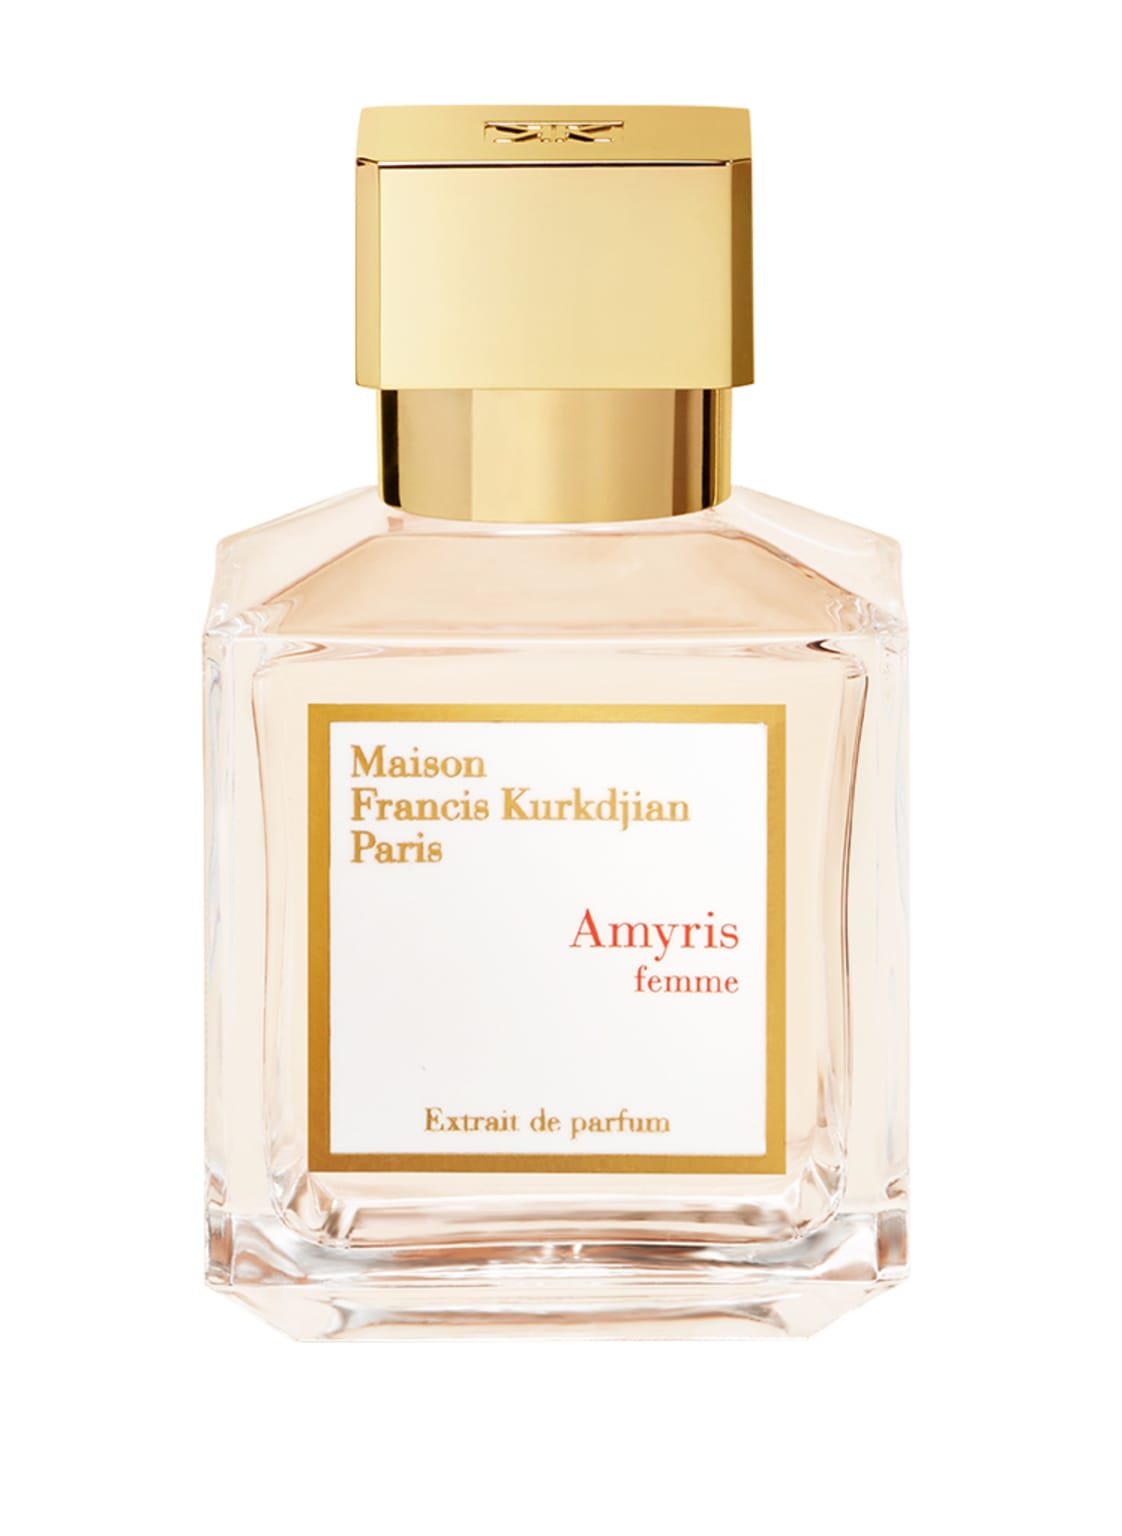 Maison Francis Kurkdjian Paris Amyris Femme Extrait de Parfum 70 ml von Maison Francis Kurkdjian Paris